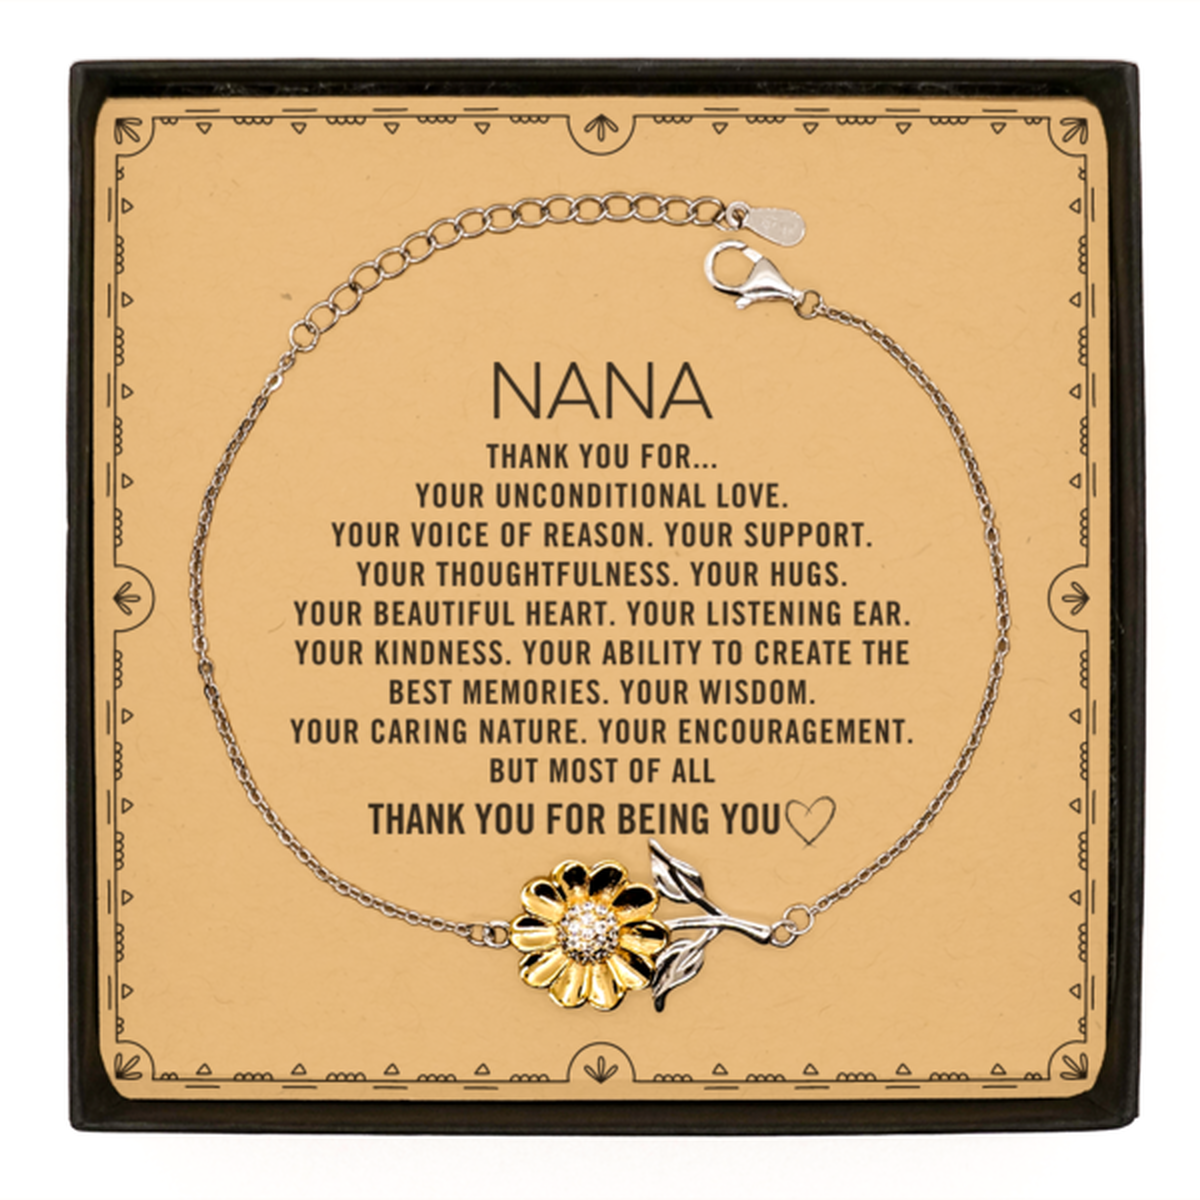 Nana Sunflower Bracelet Custom, Message Card Gifts For Nana Christmas Graduation Birthday Gifts for Men Women Nana Thank you for Your unconditional love